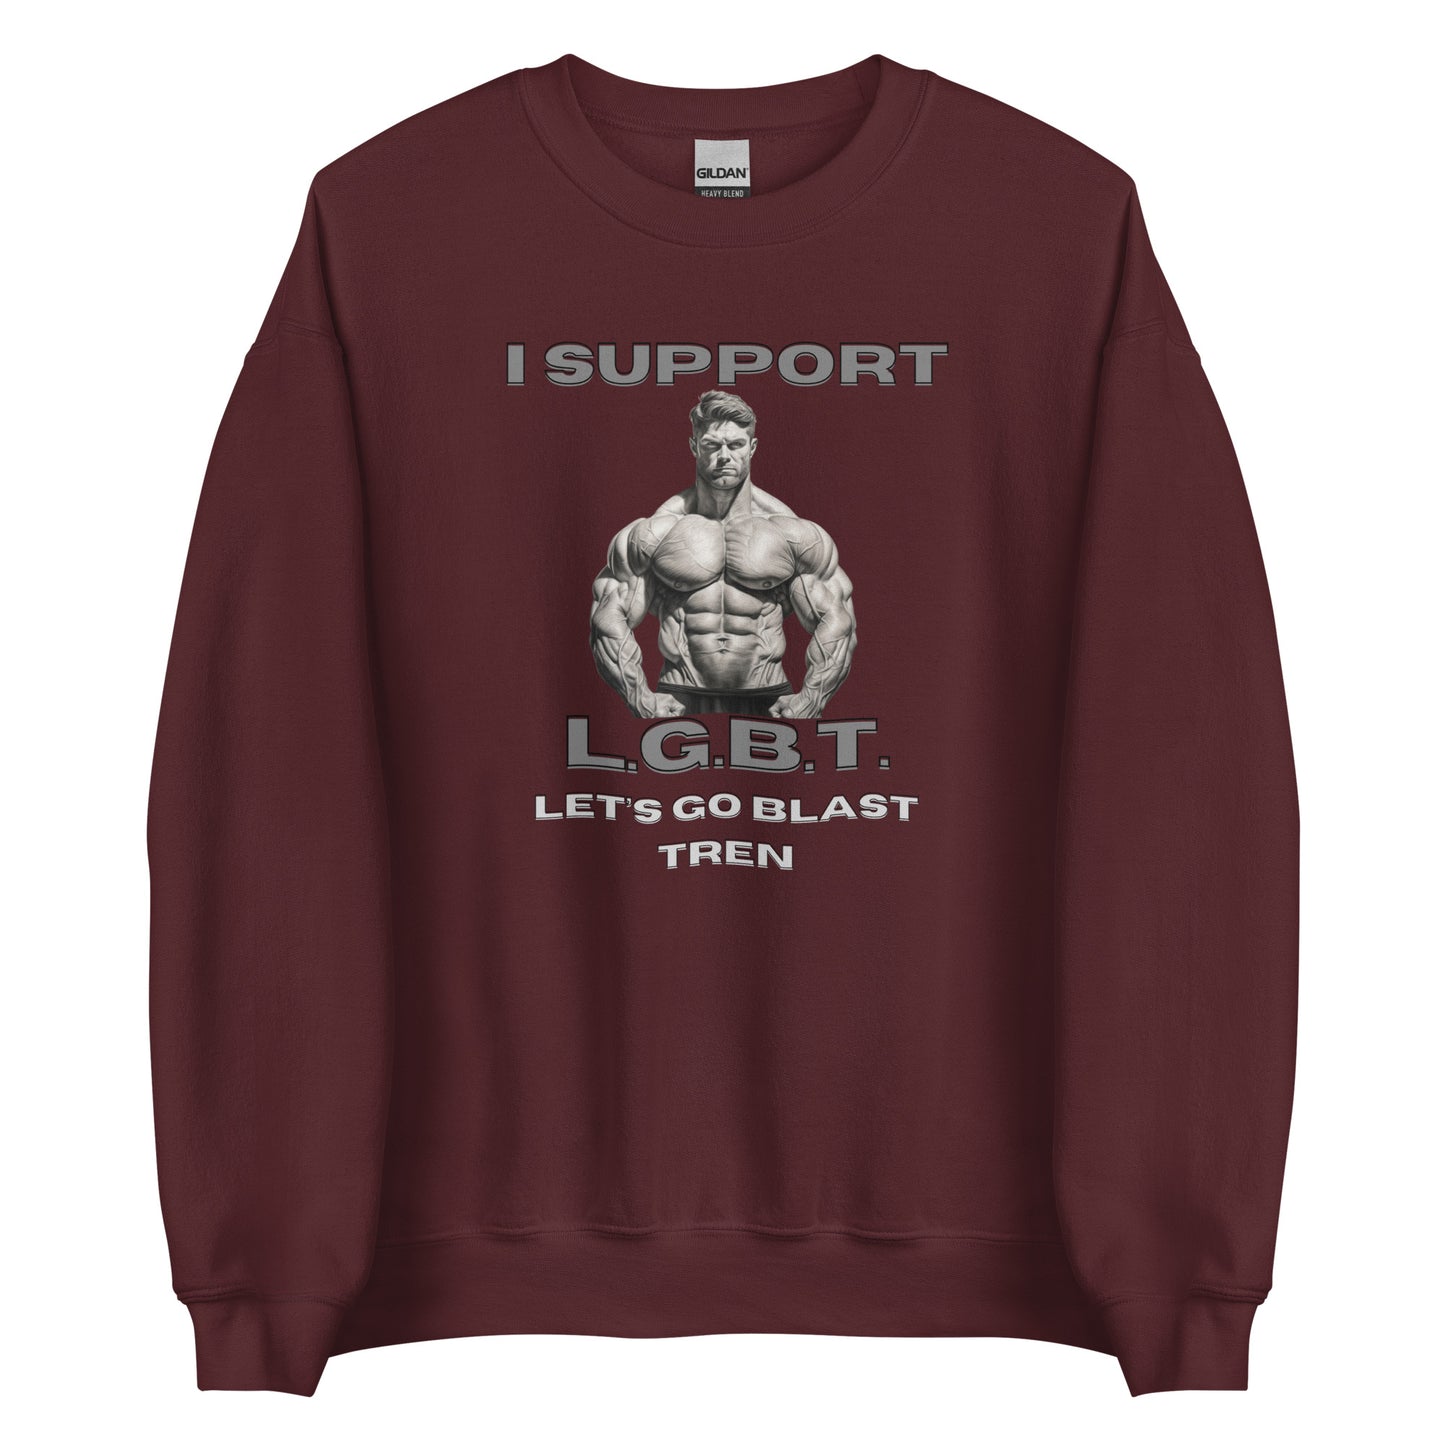 I SUPPORT L.G.B.T.